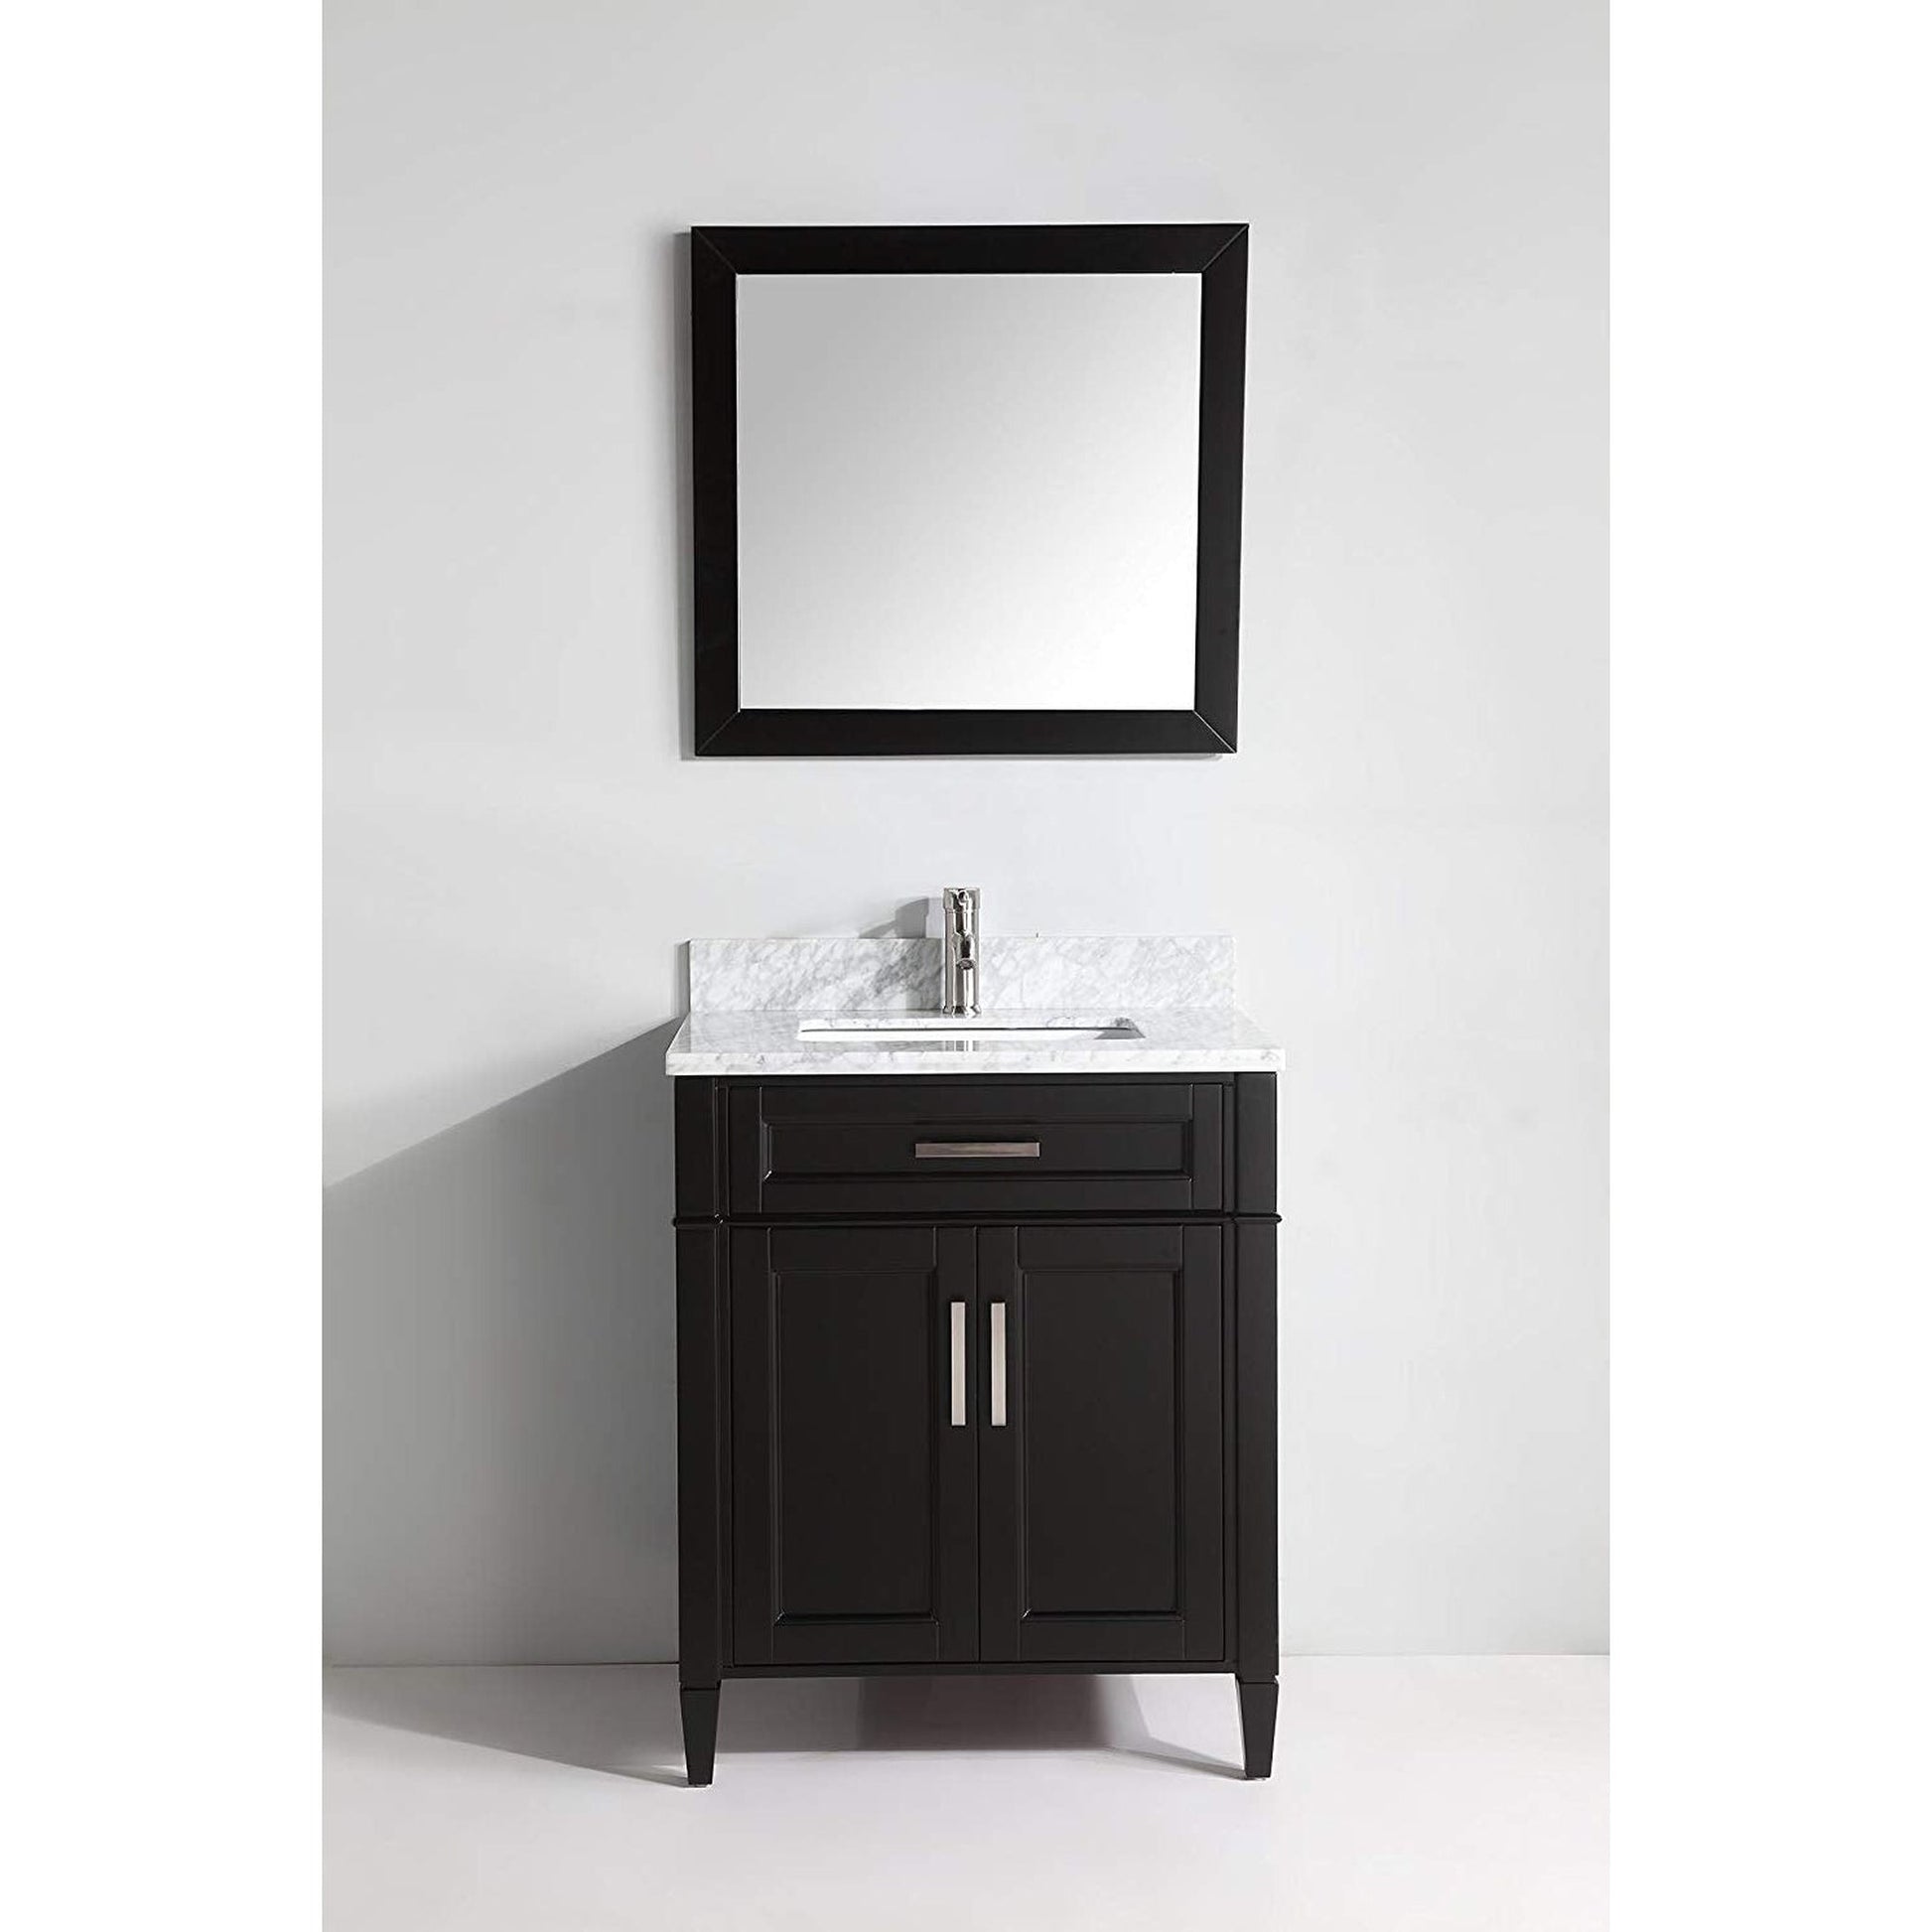 Vanity Art Savona 30" Single Espresso Freestanding Modern Bathroom Vanity Set With Carrara Marble Top, Undermount Ceramic Sink, 1 Dovetail Drawer Cabinet, Backsplash and Mirror